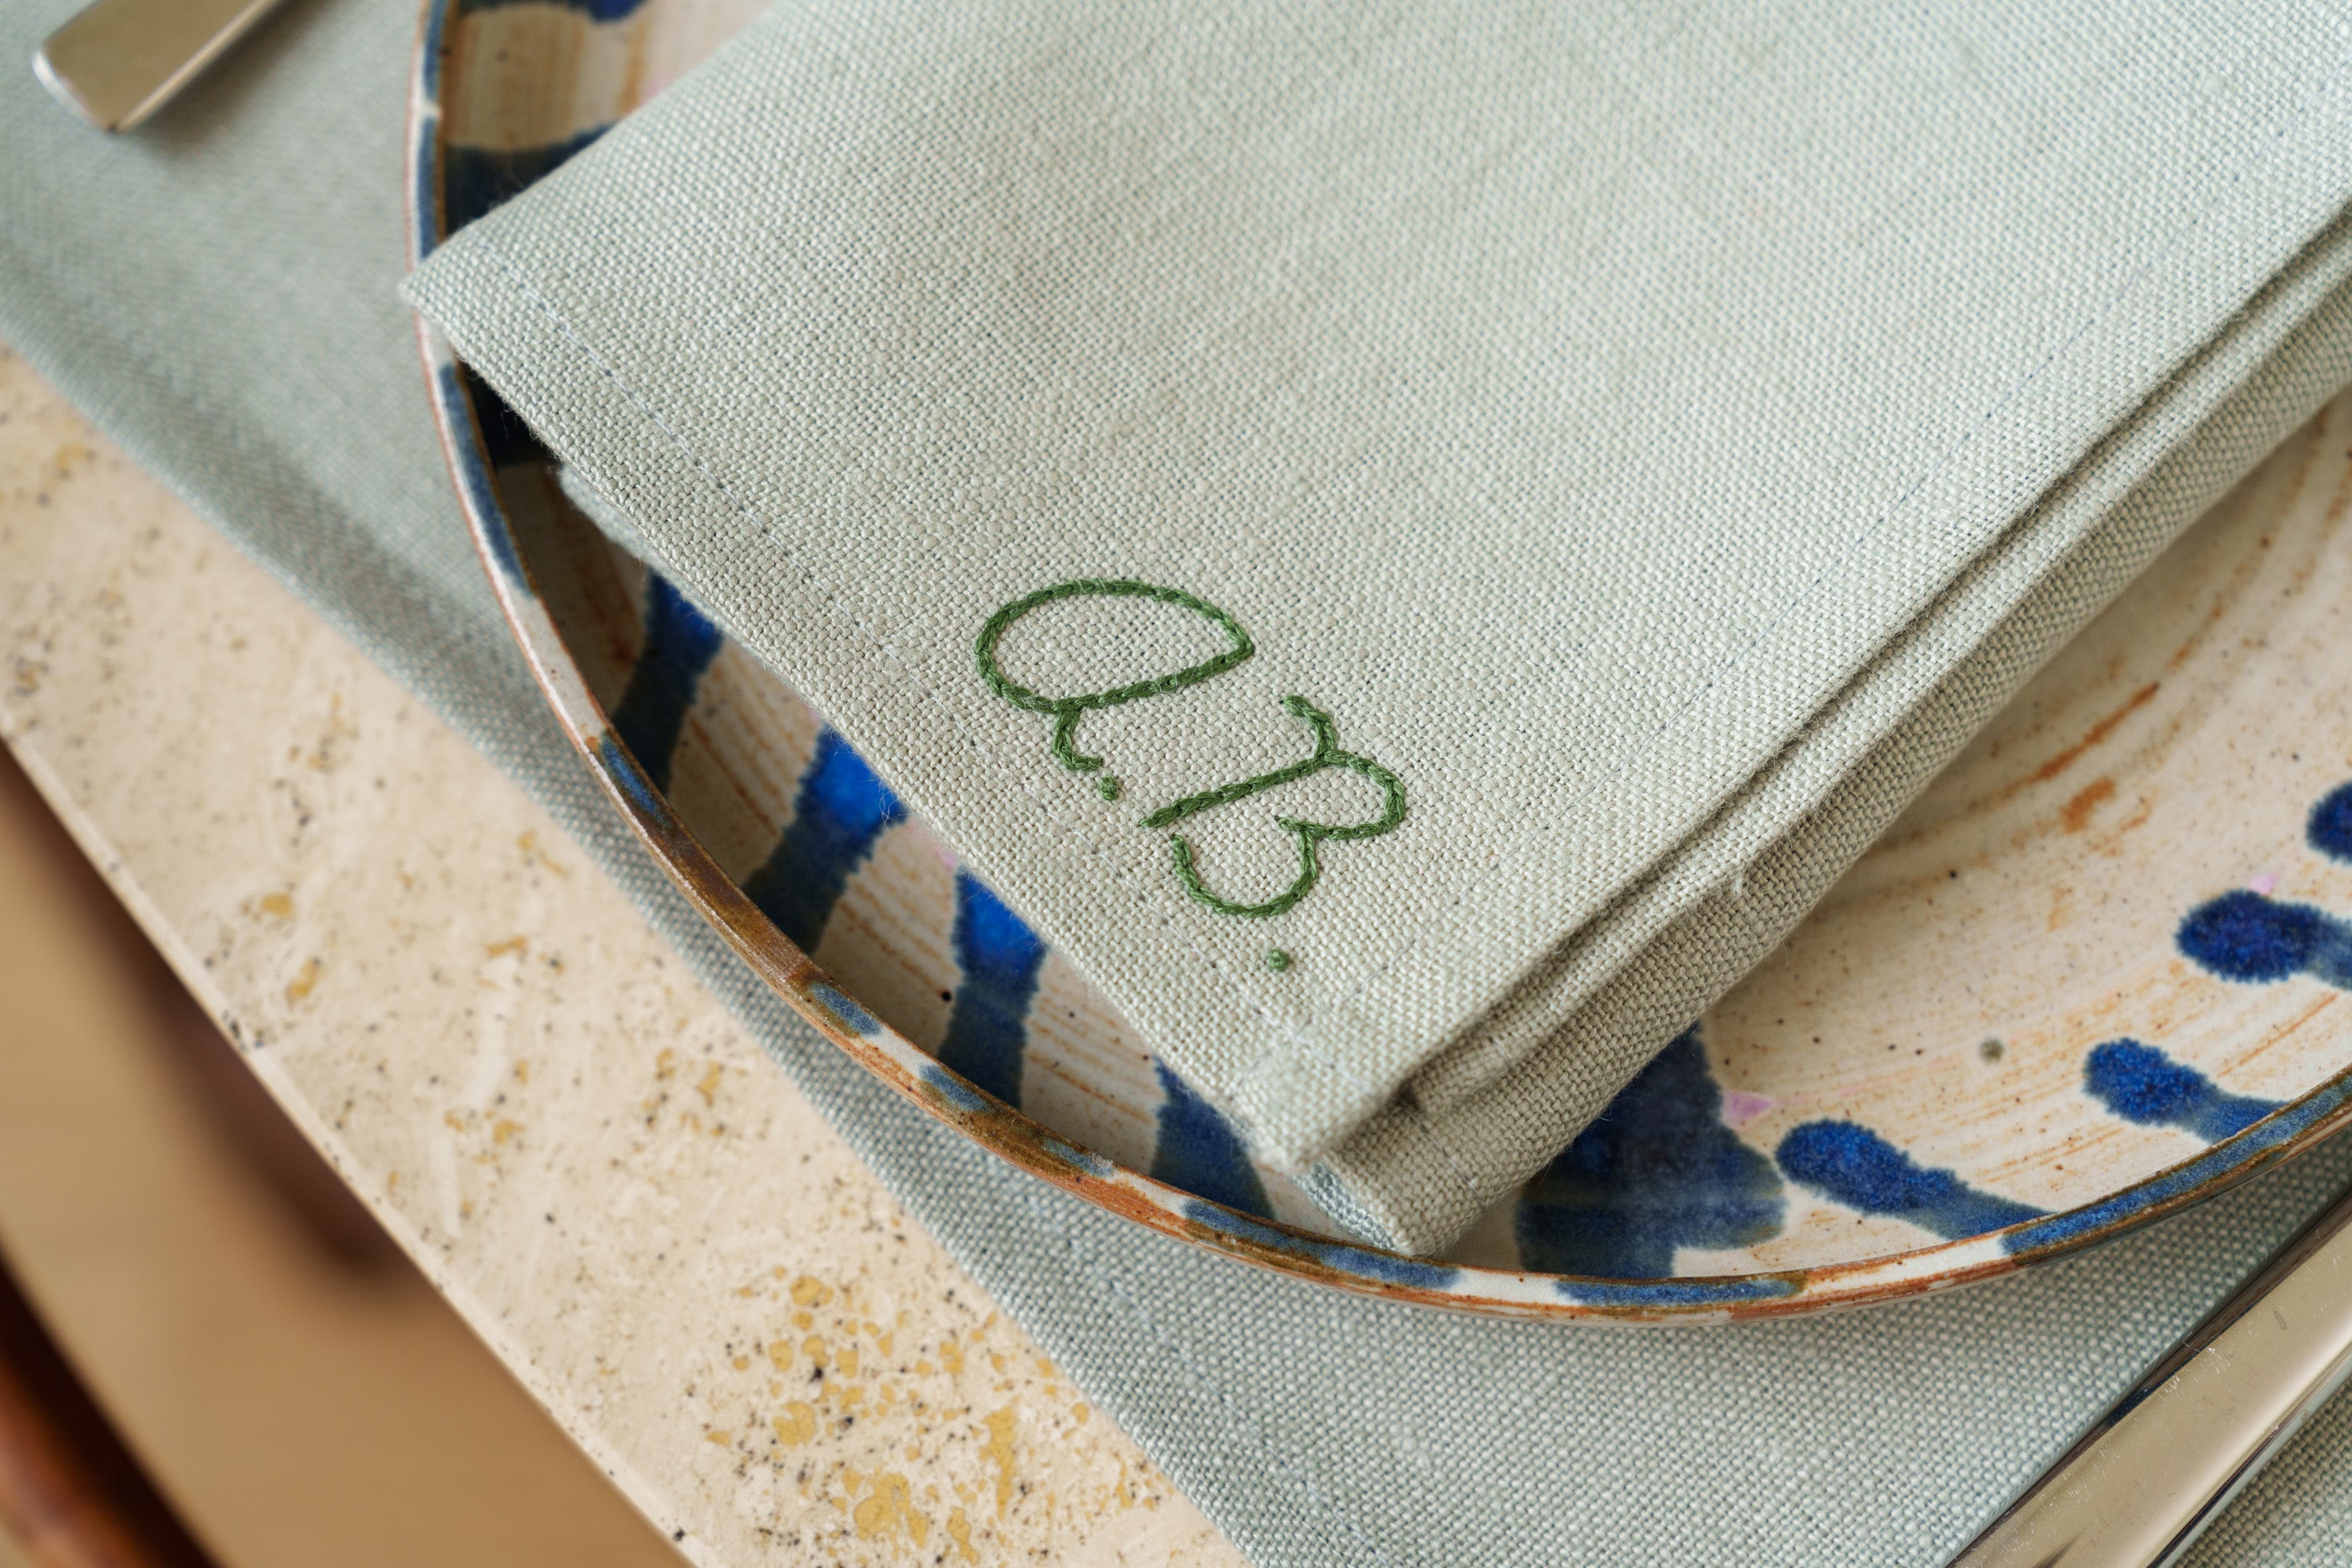 The water green linen napkin